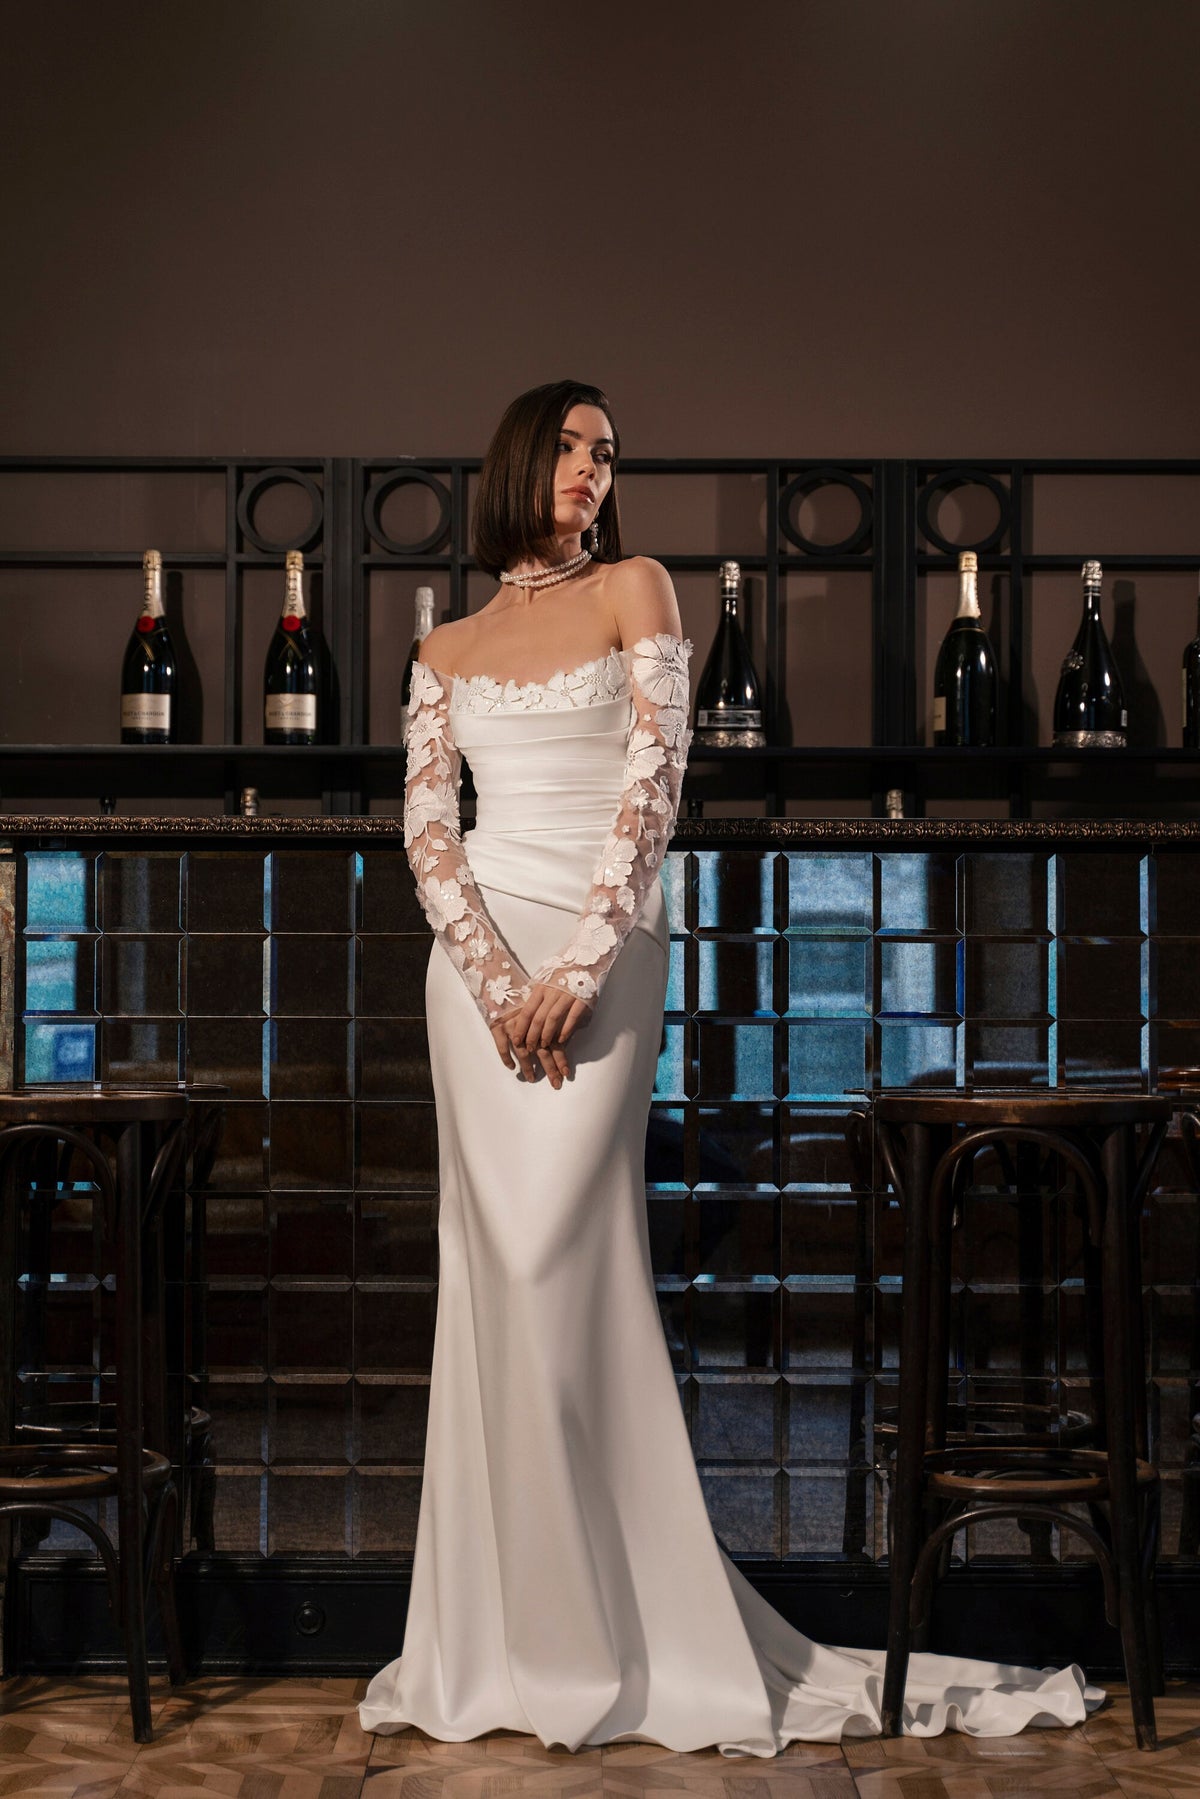 Unique Floral Lace Sleeves Strapless Off the Shoulder Wedding Dress Bridal Gown Gathered Waist Detachable Train Minimalist Design